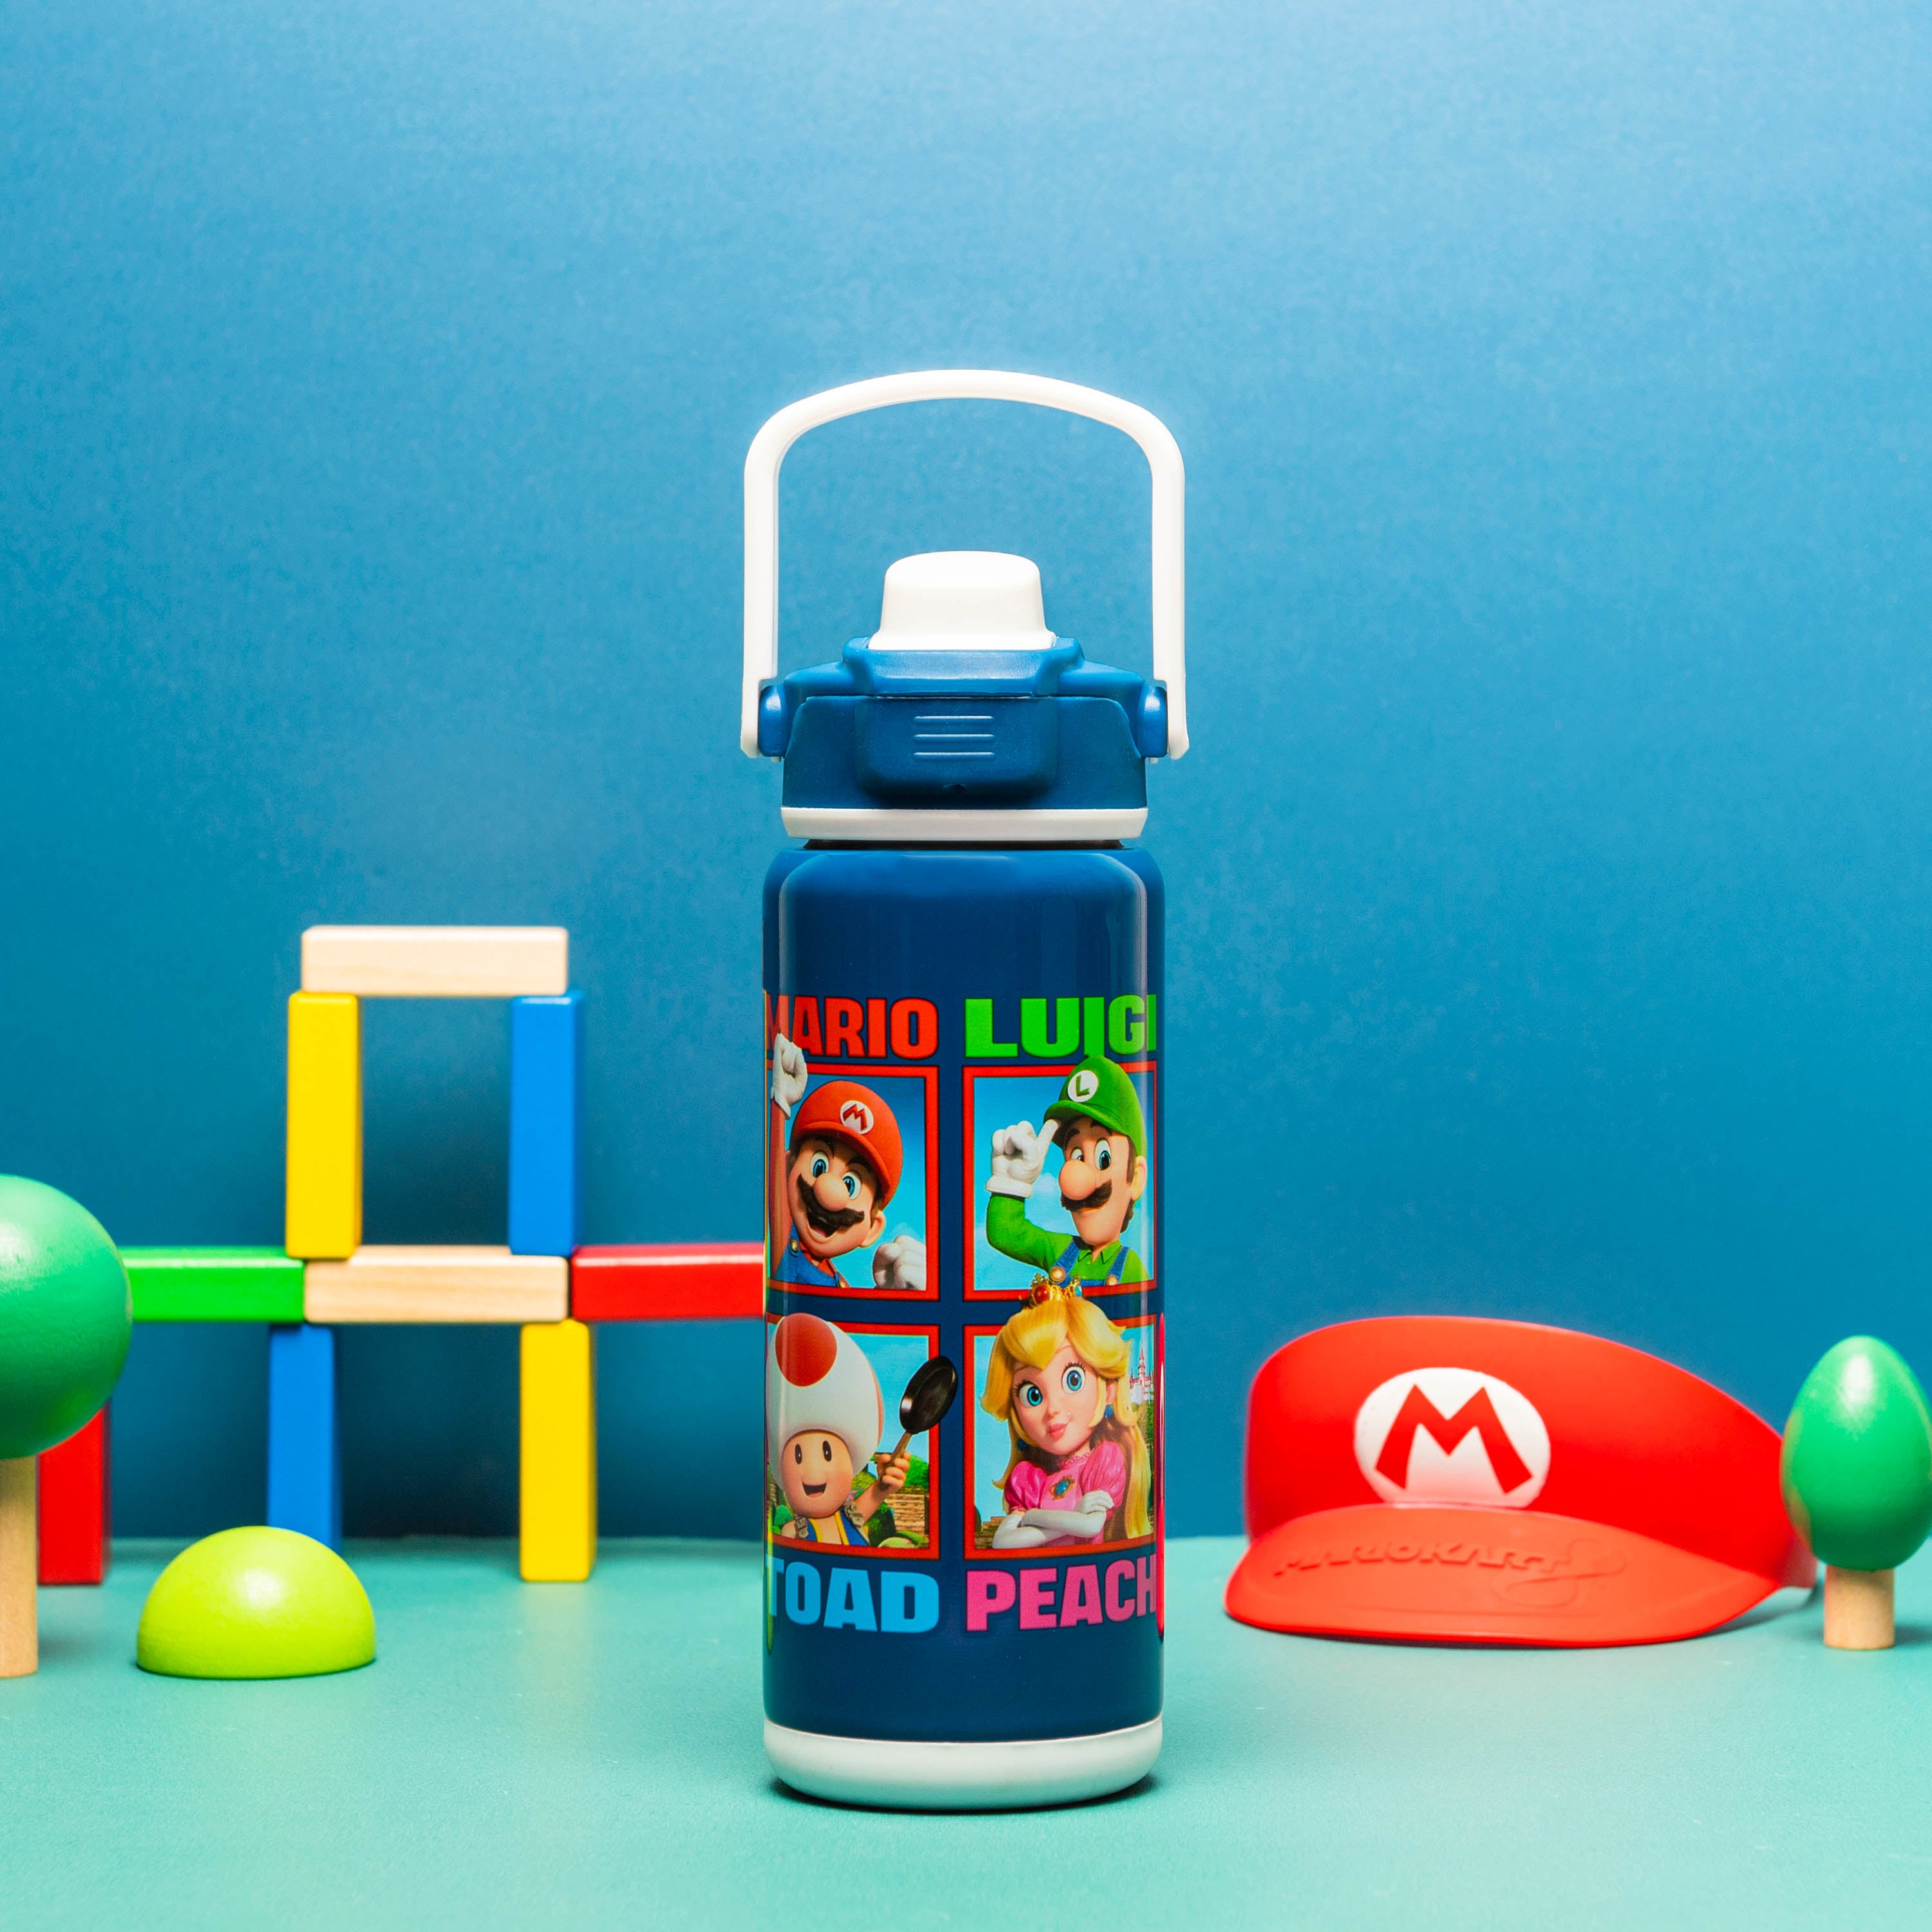 Zak Designs Nintendo 25 Ounce Water Bottle, Mario Movie, Size: 4.08 inch x 3.05 inch x 8.95 inch